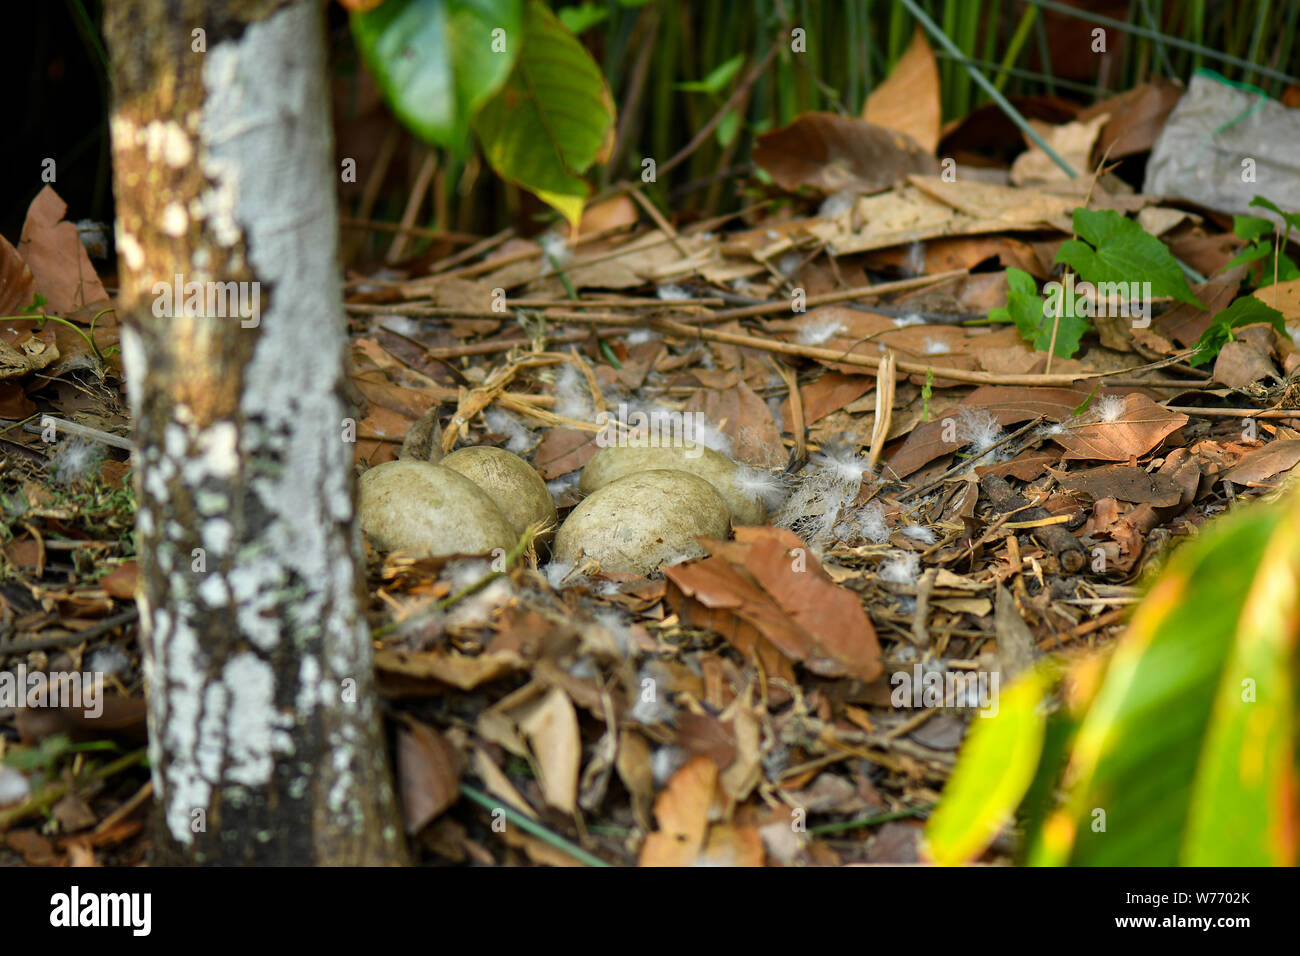 Black Swan nesting eggs in nature enviroment Stock Photo